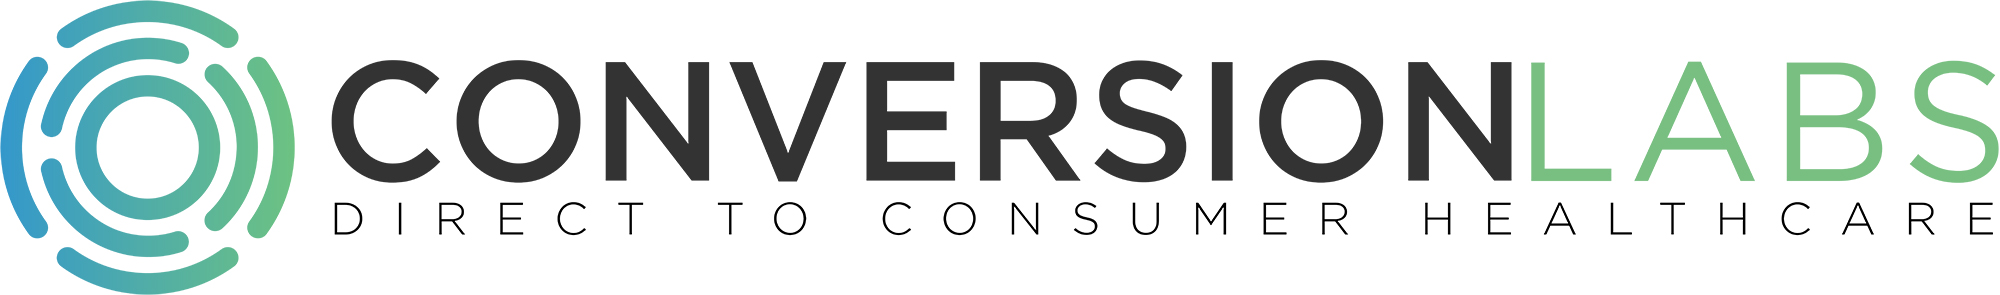 Conversion Labs New Logo.jpg